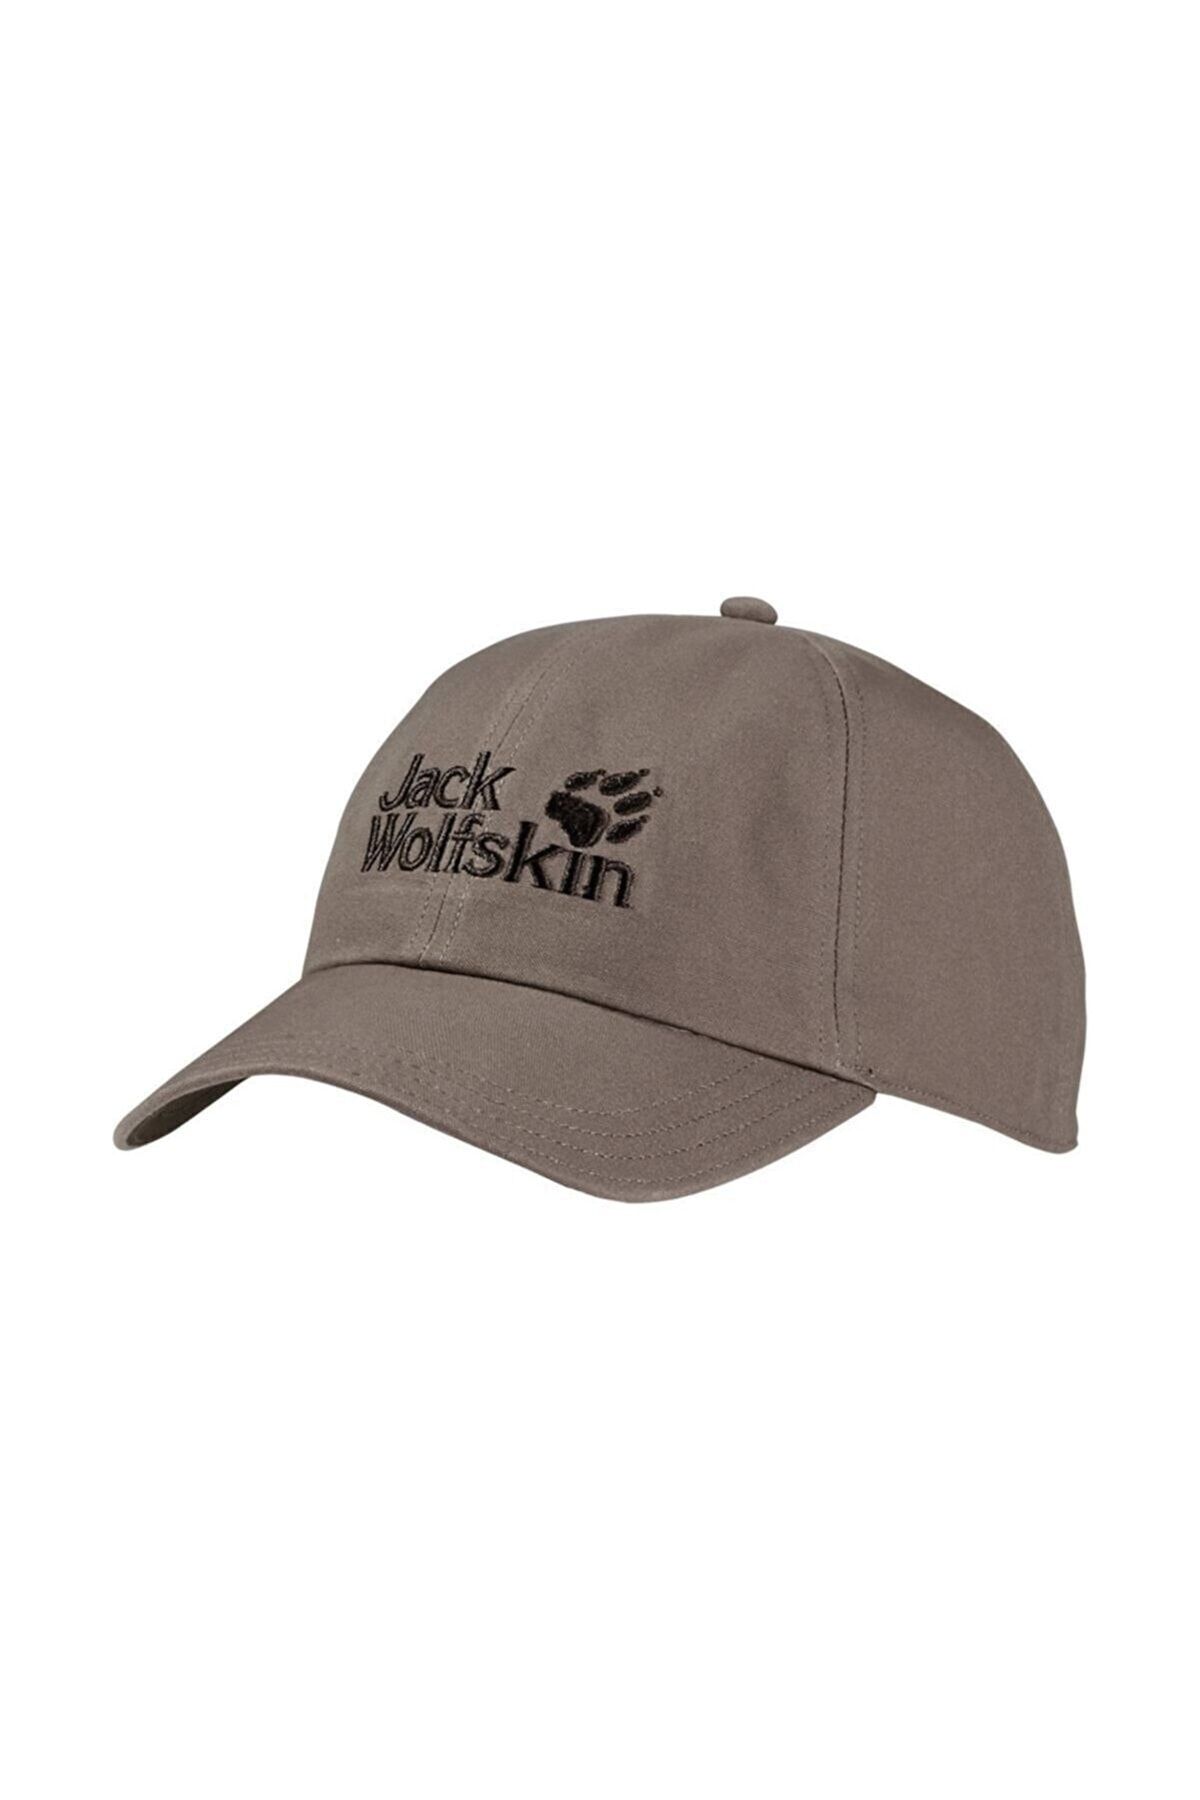 Jack Wolfskin Baseball Cap Kahverengi Unisex Şapka